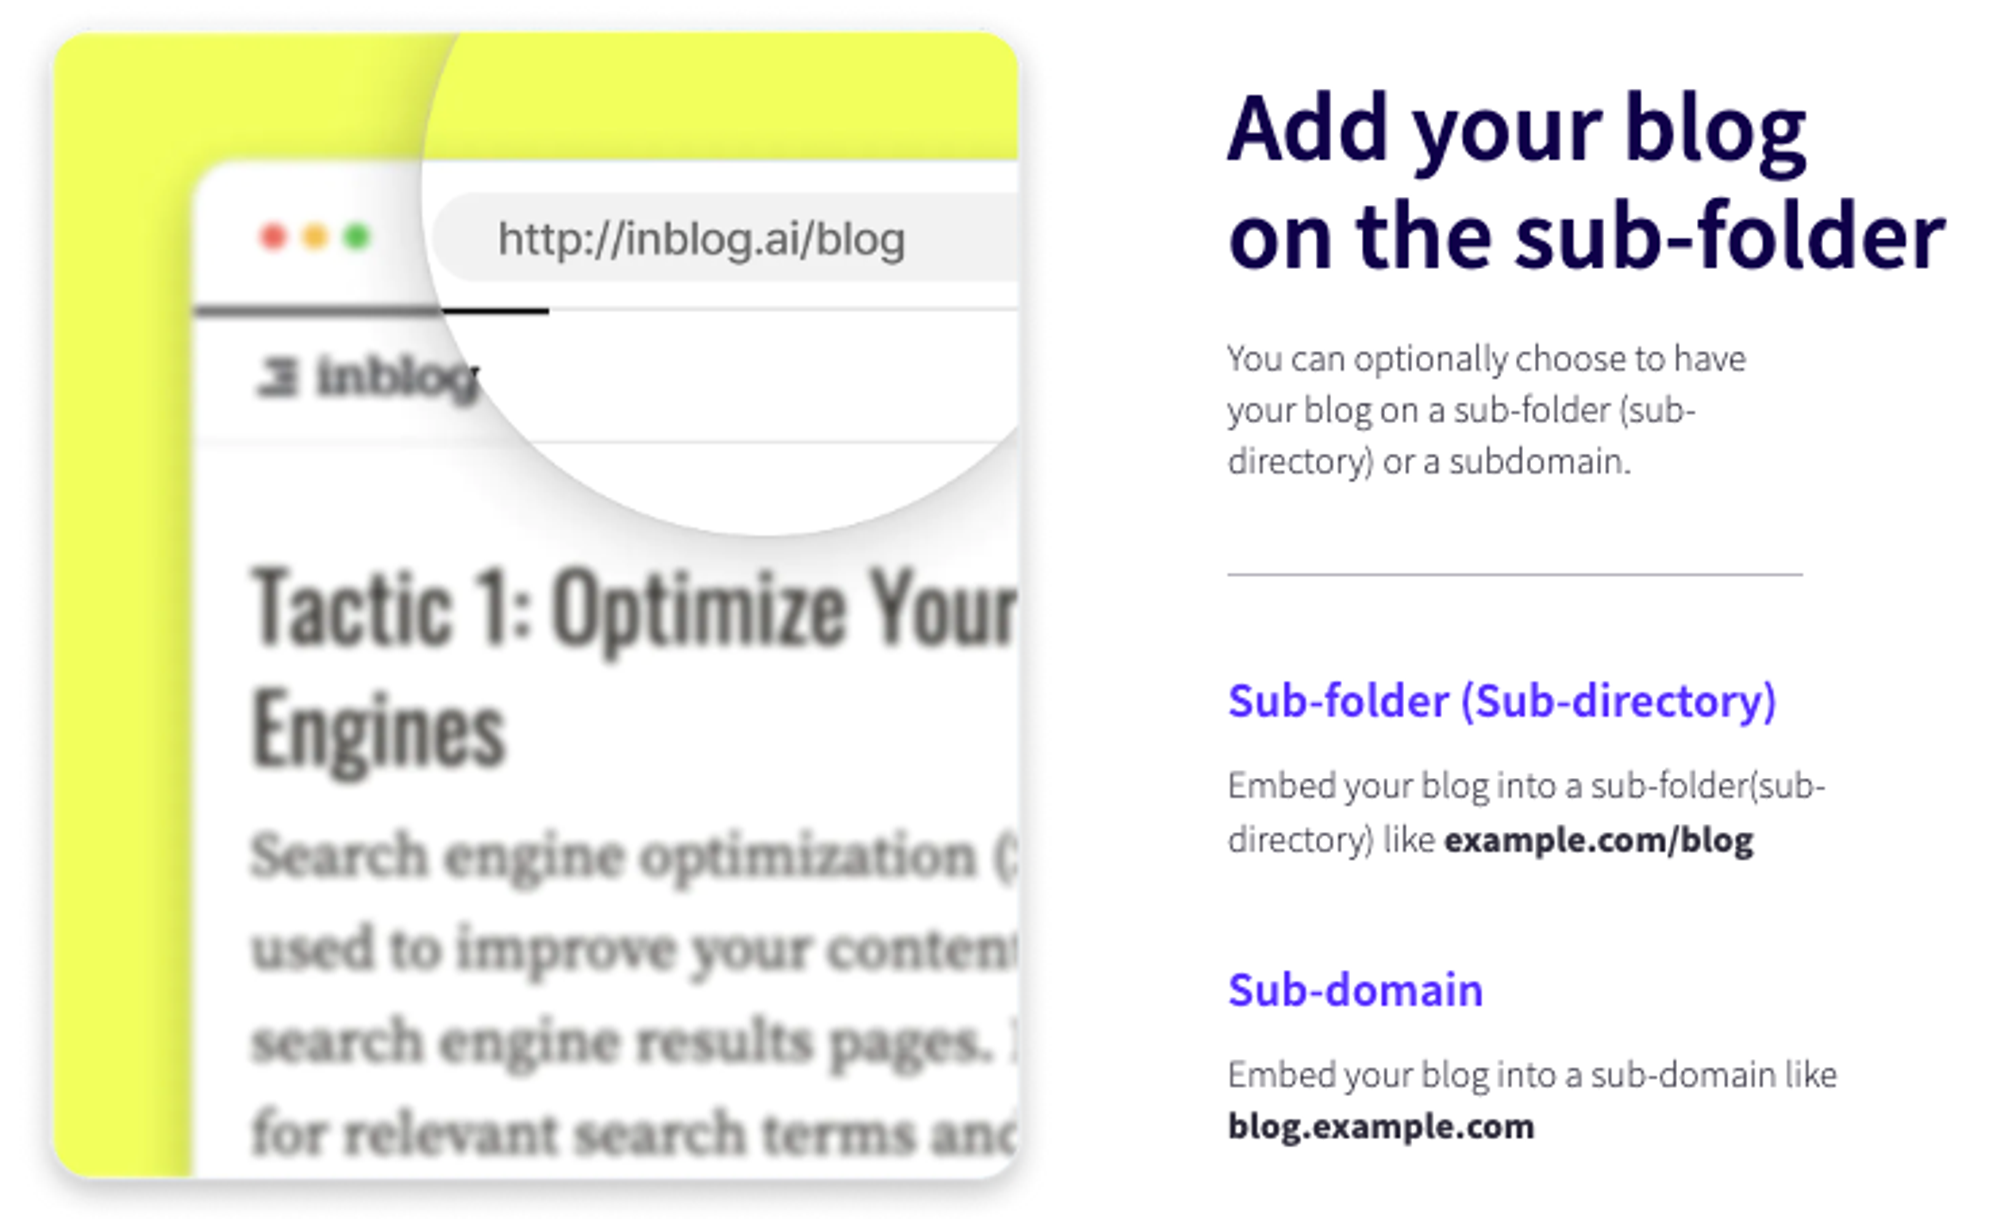 inblog: Add your blog on the sub-folder